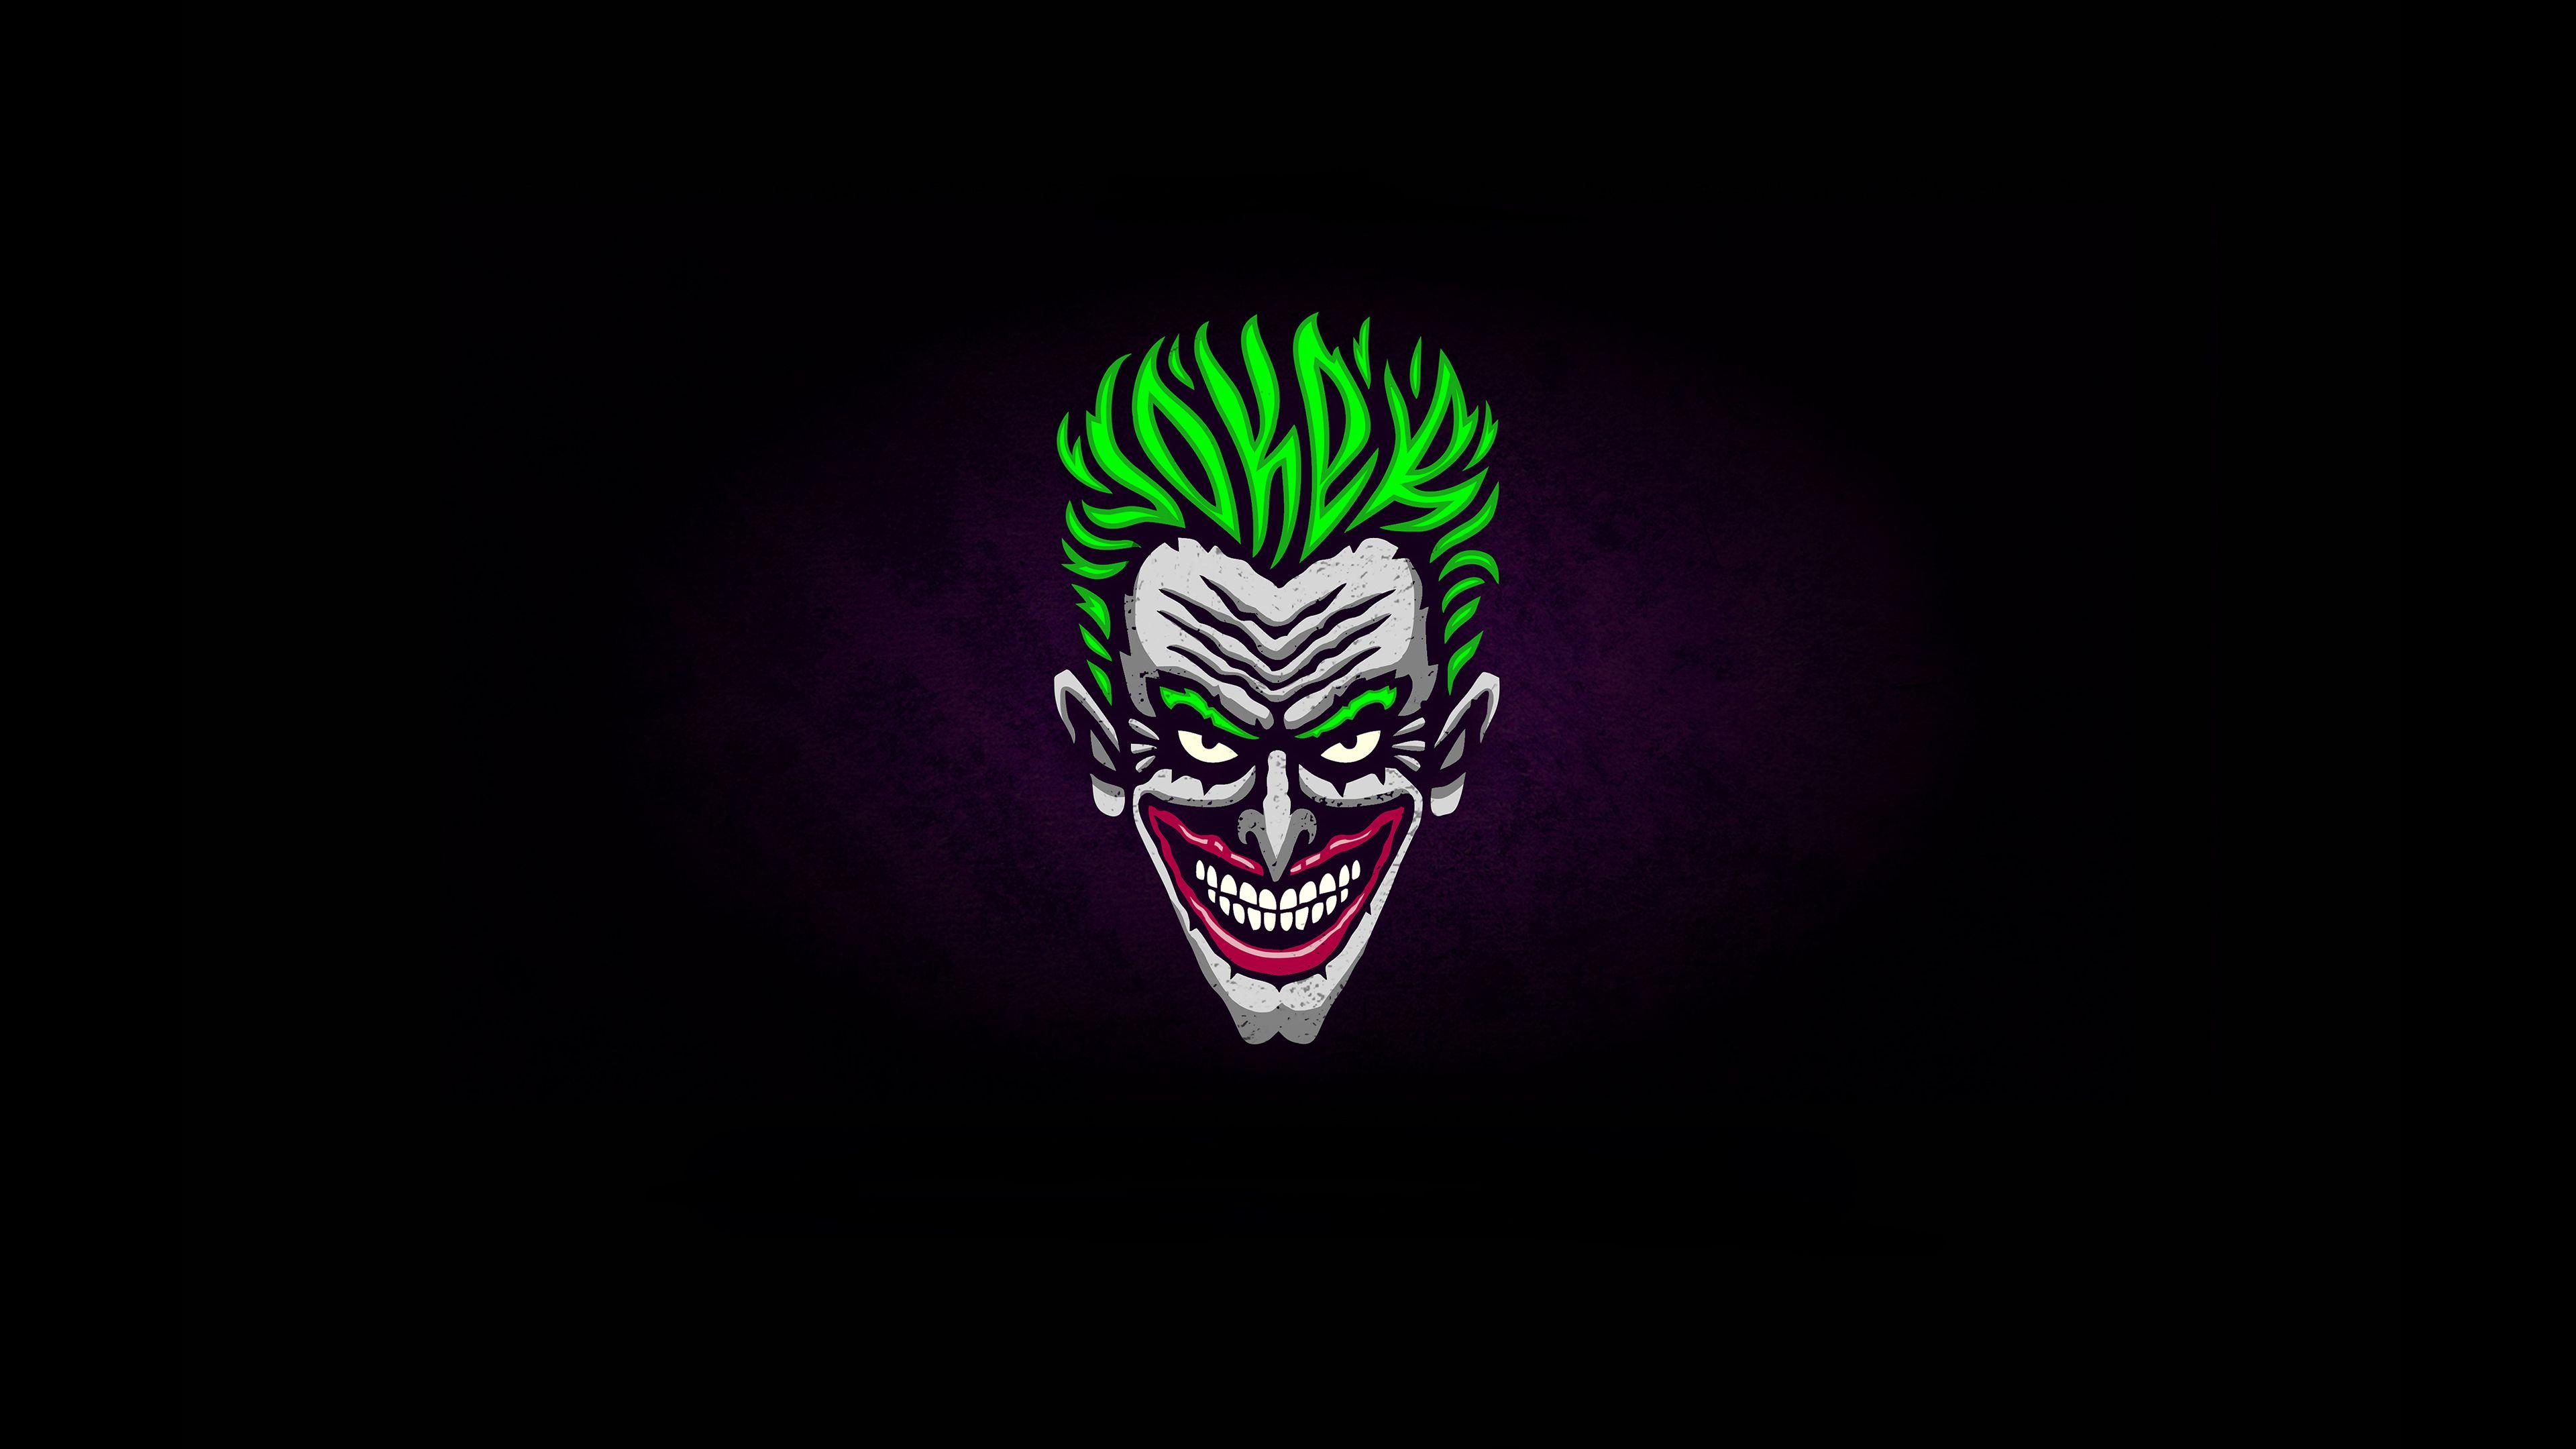 3840x2160 Hình nền tối giản Minh họa Joker 4k Ultra HD